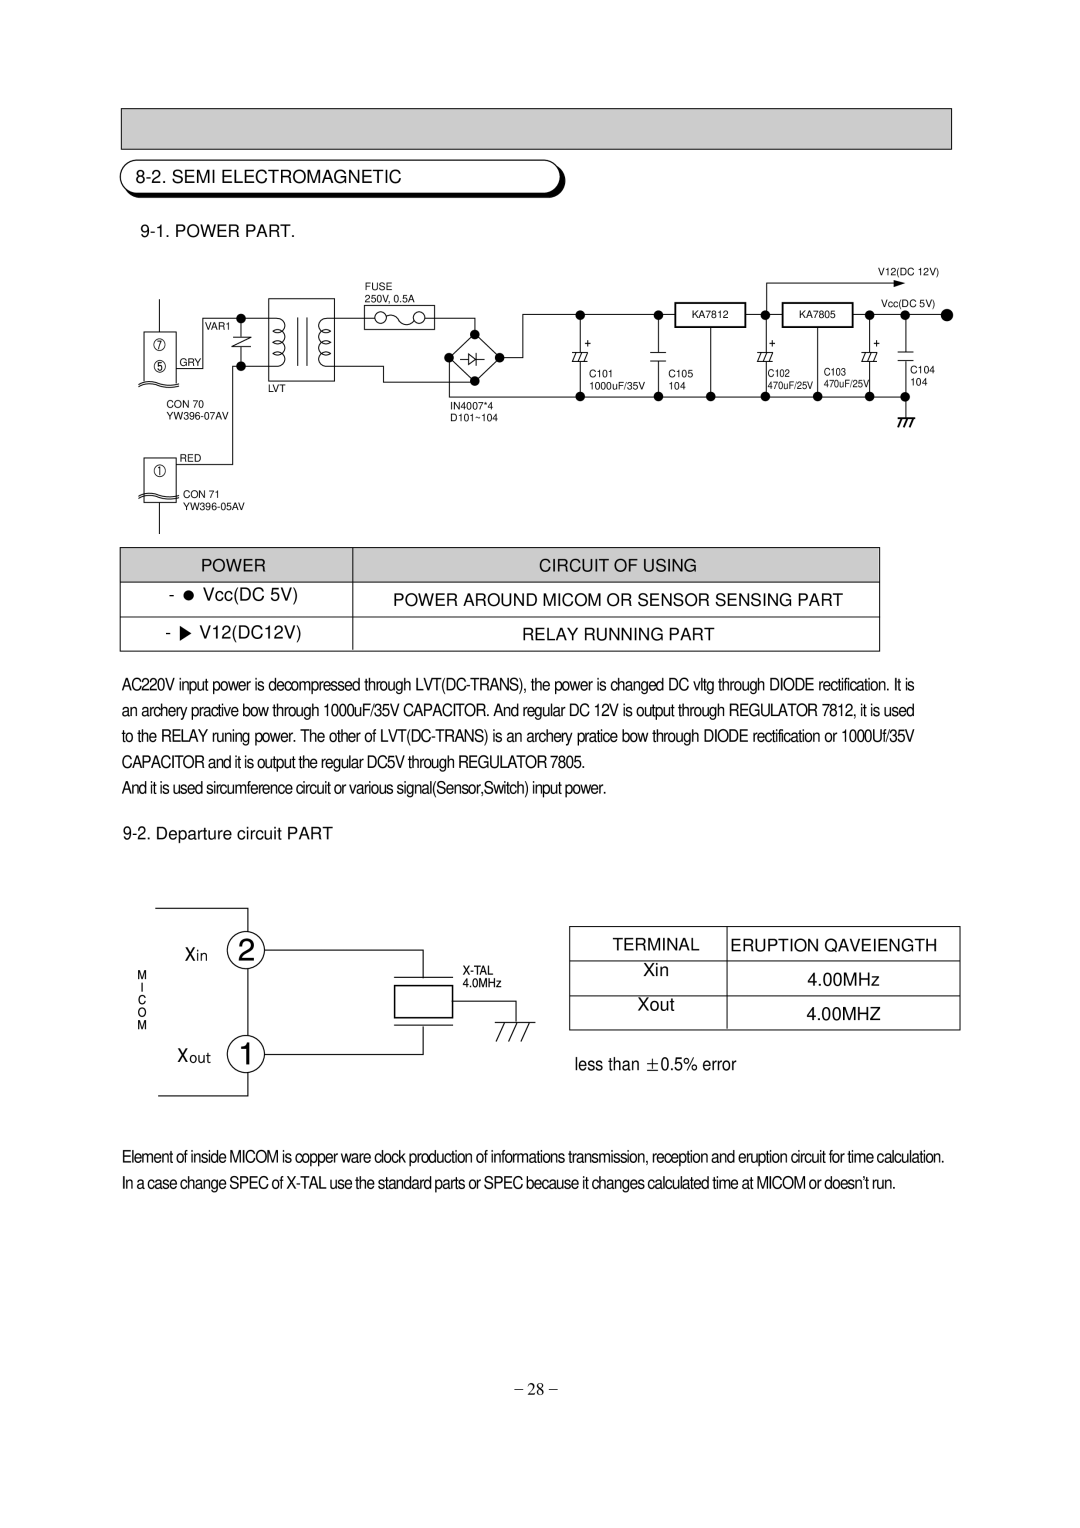 Samsung SR-61NMC, SR-65KTC, SR-65NMC, SR-69NMC, SR-61KTC specifications SEMI ELECTROMAGNETIC 9-1.POWER PART 